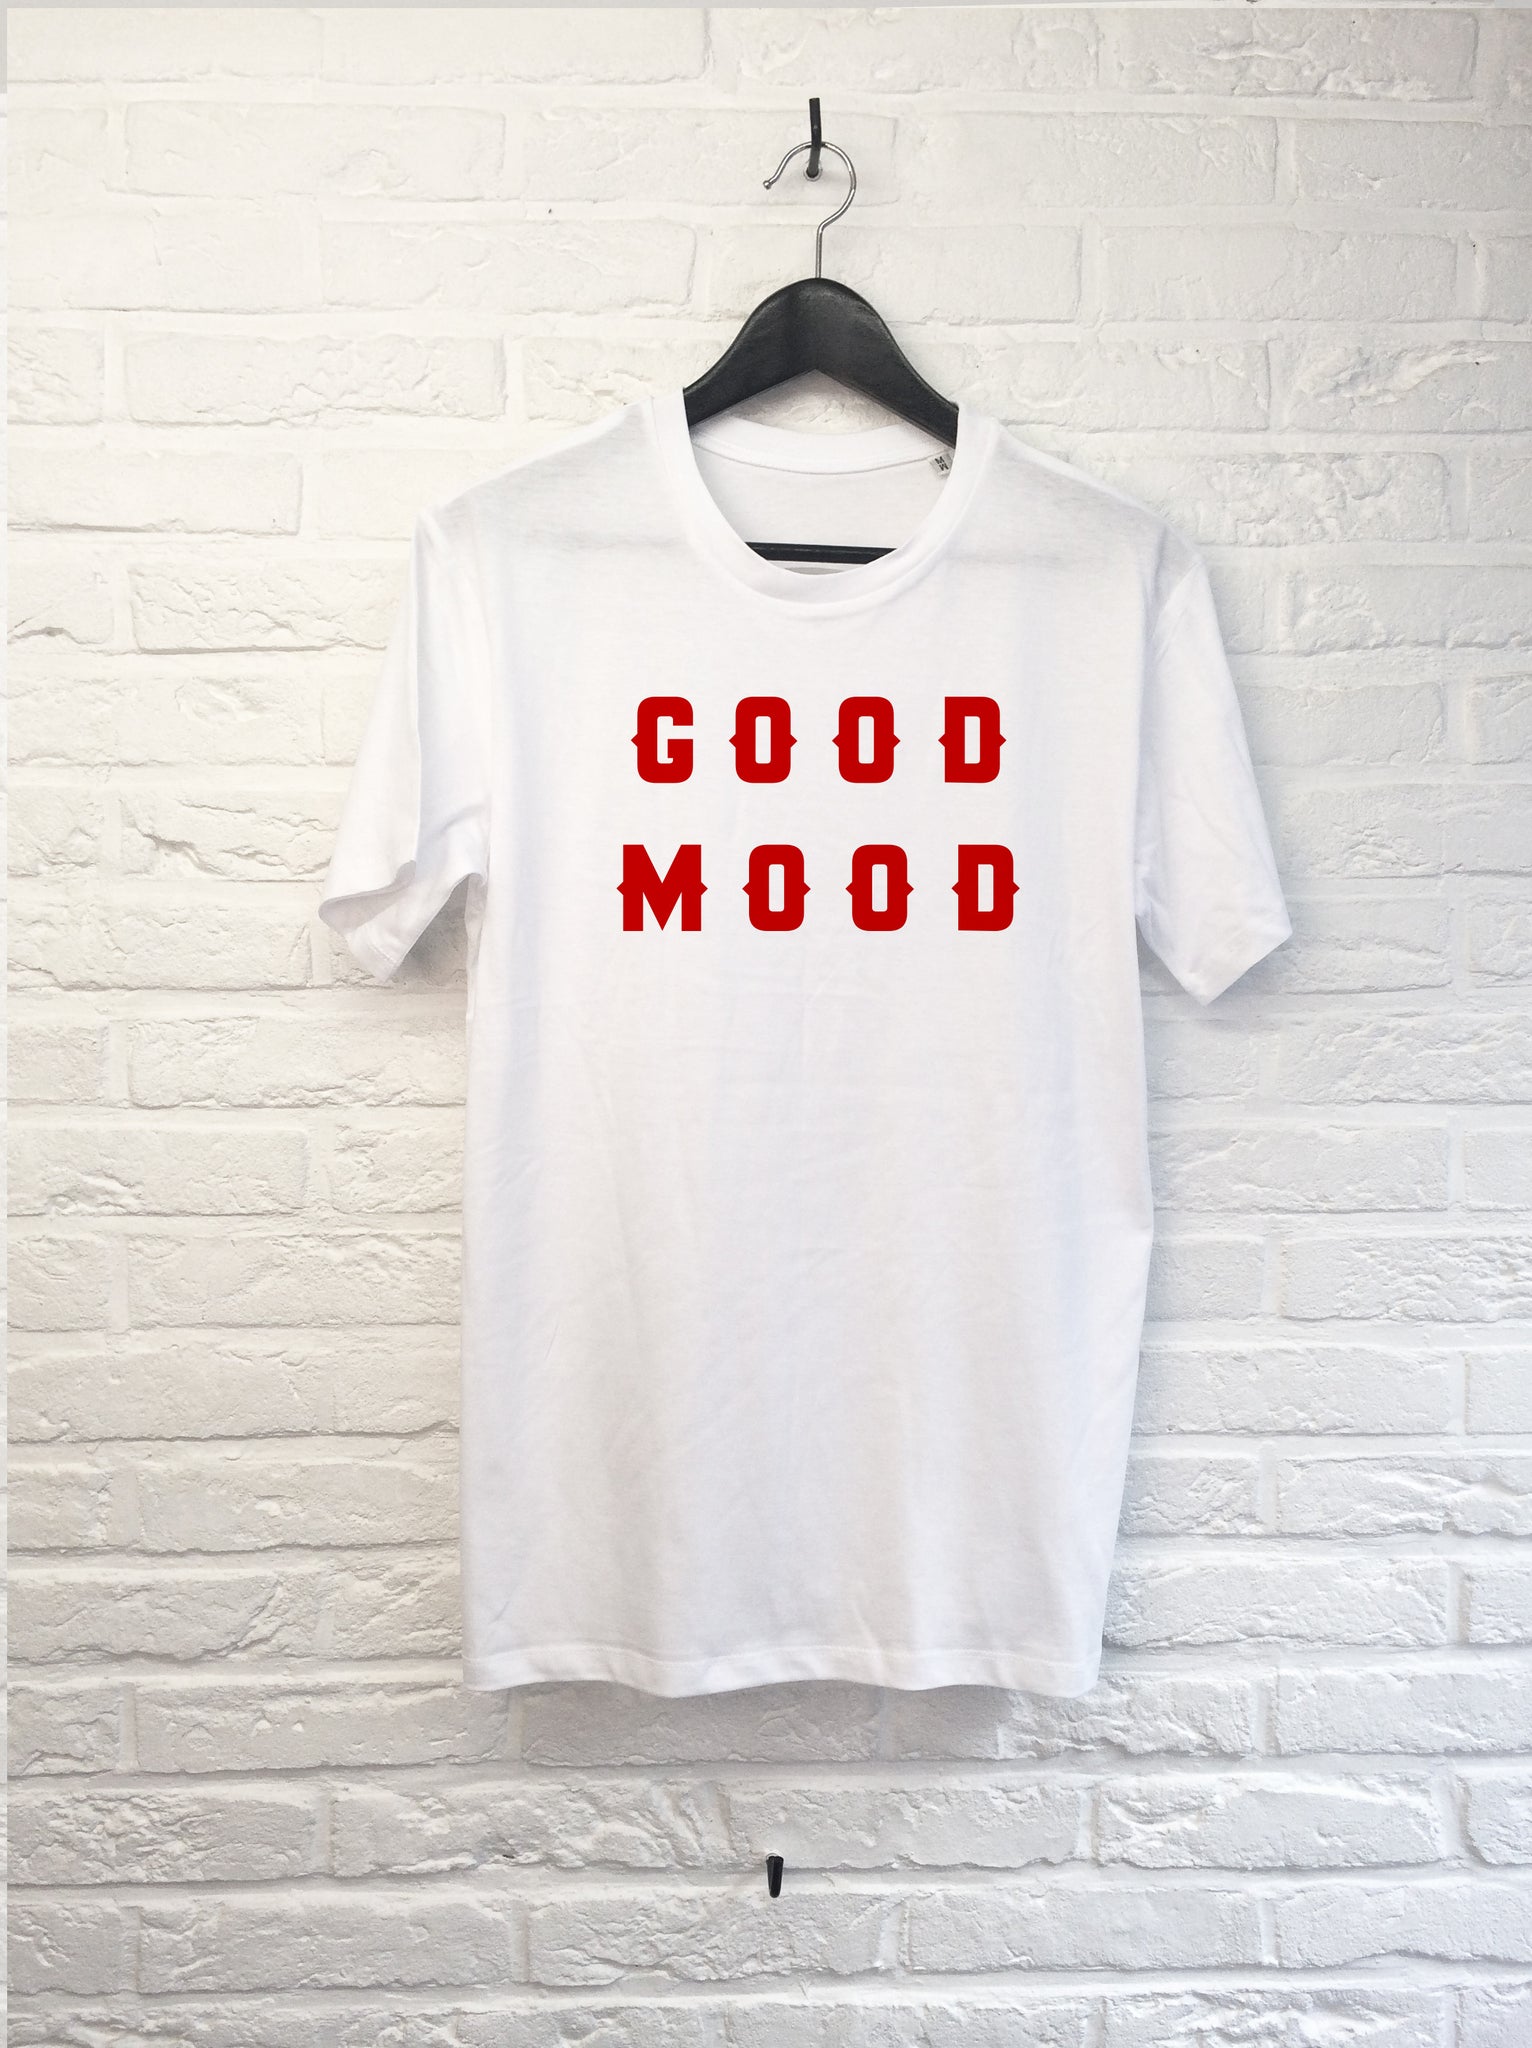 Good Mood-T shirt-Atelier Amelot